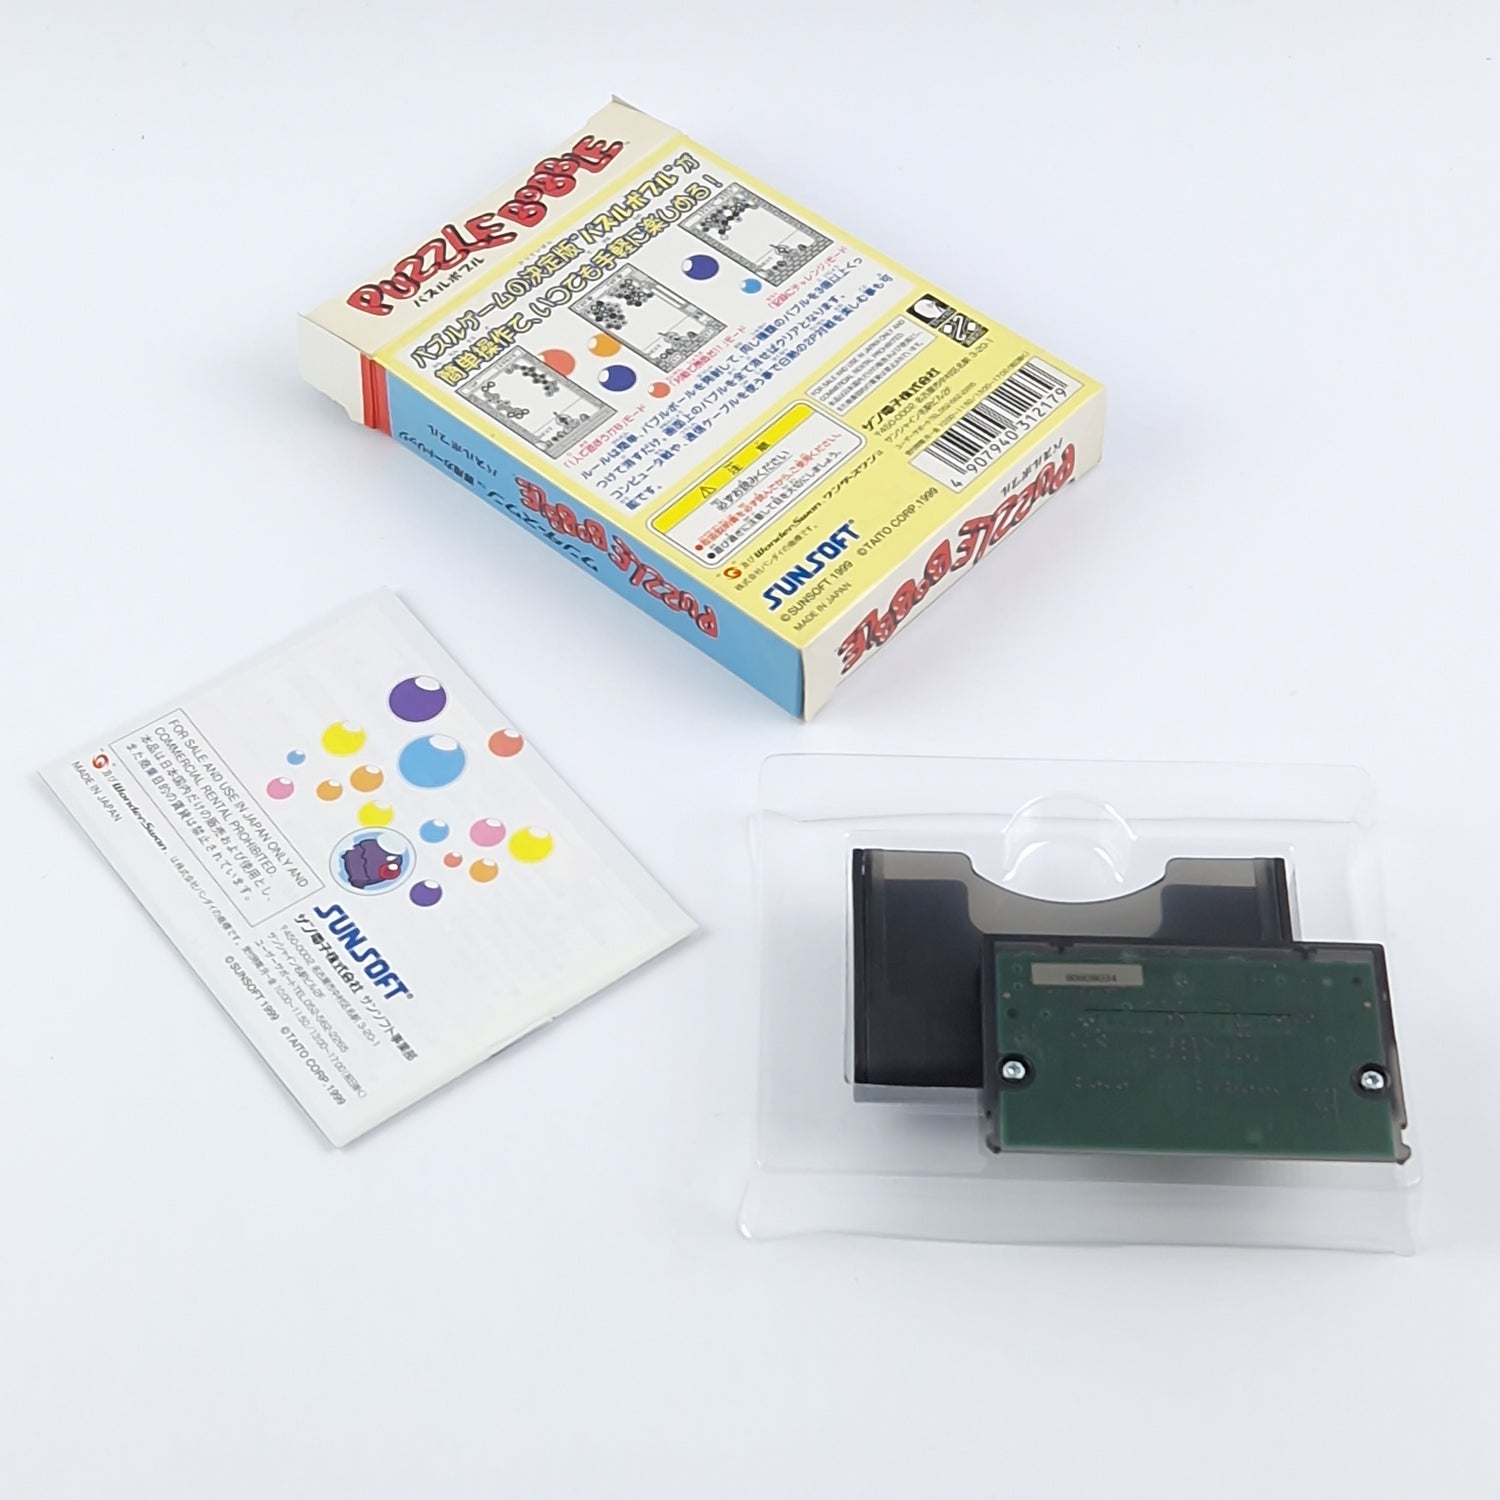 Wonderswan Game: Puzzle Bobble - Original Packaging Instructions Cartridge - Wonder Swan JAPAN